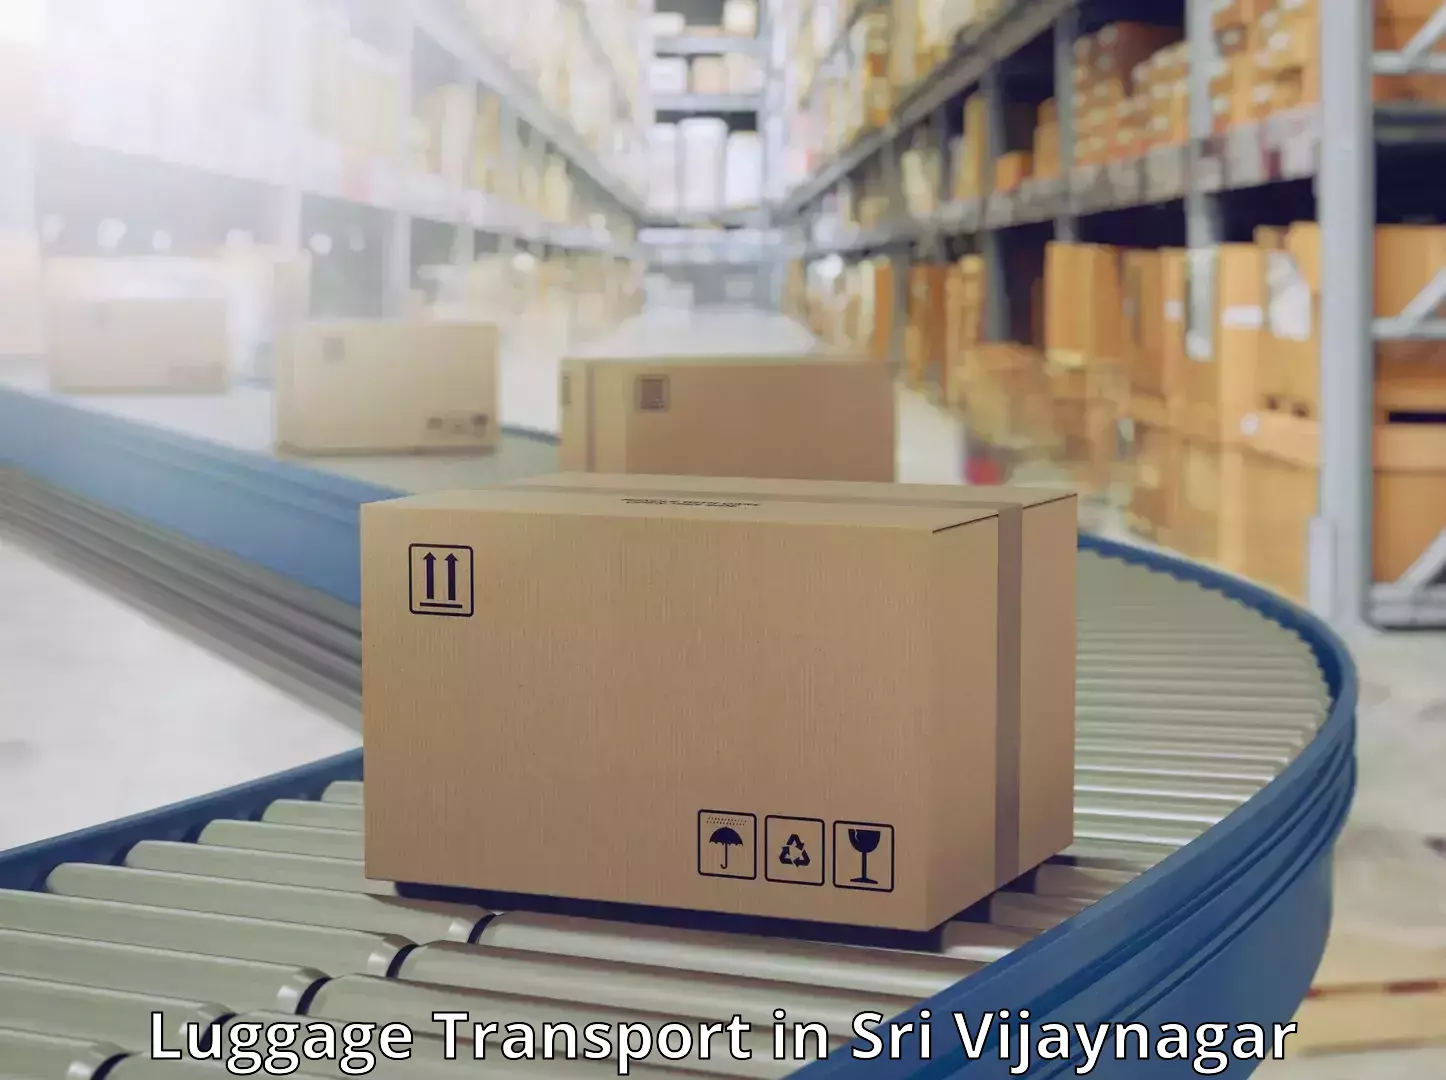 Personal luggage delivery in Sri Vijaynagar